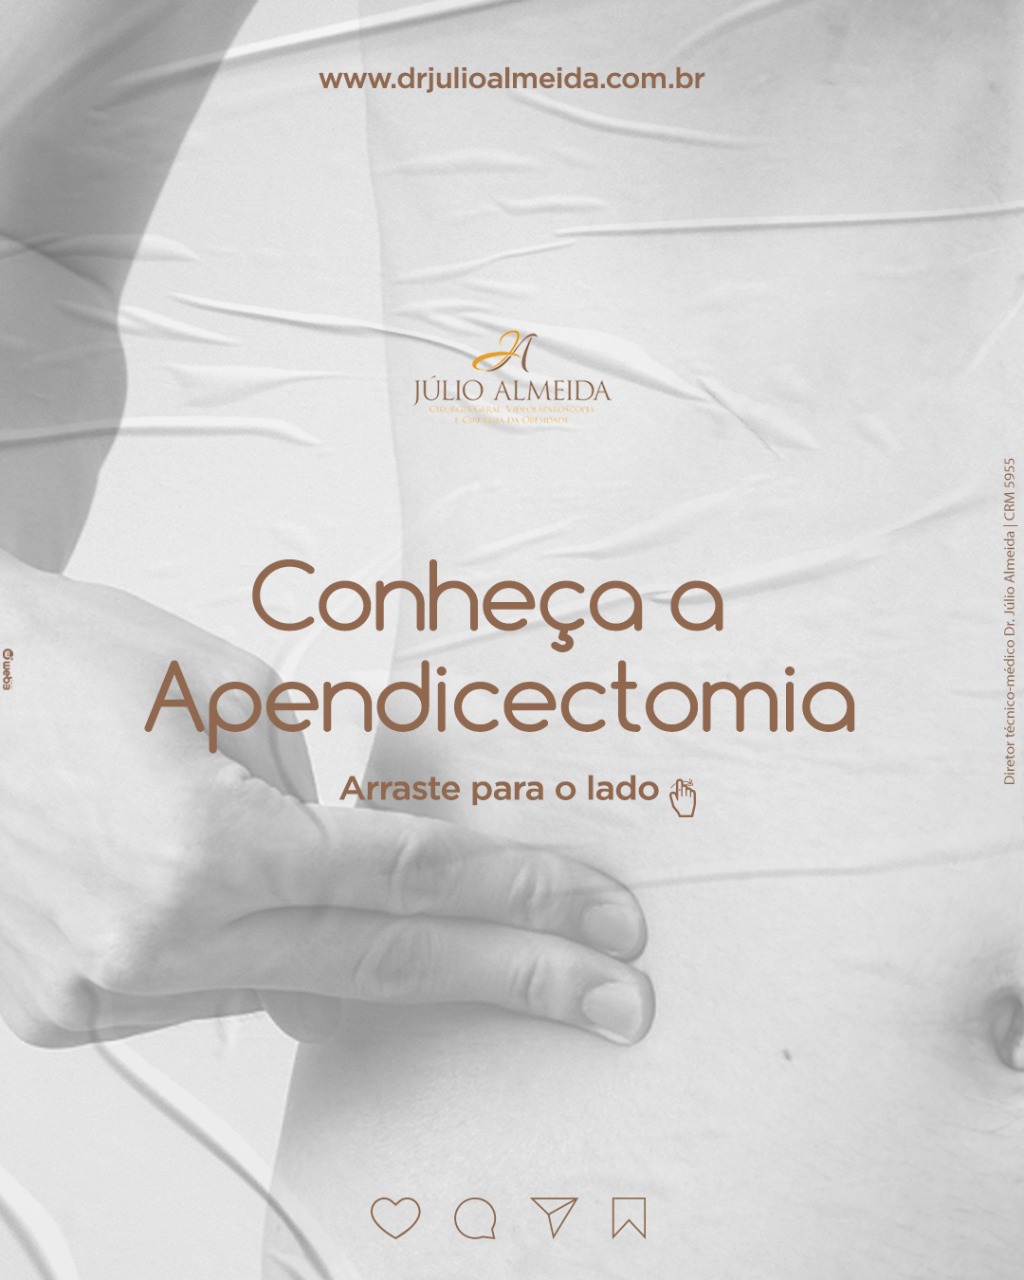 Dr Alexandre - Conheça a Apendicectomia